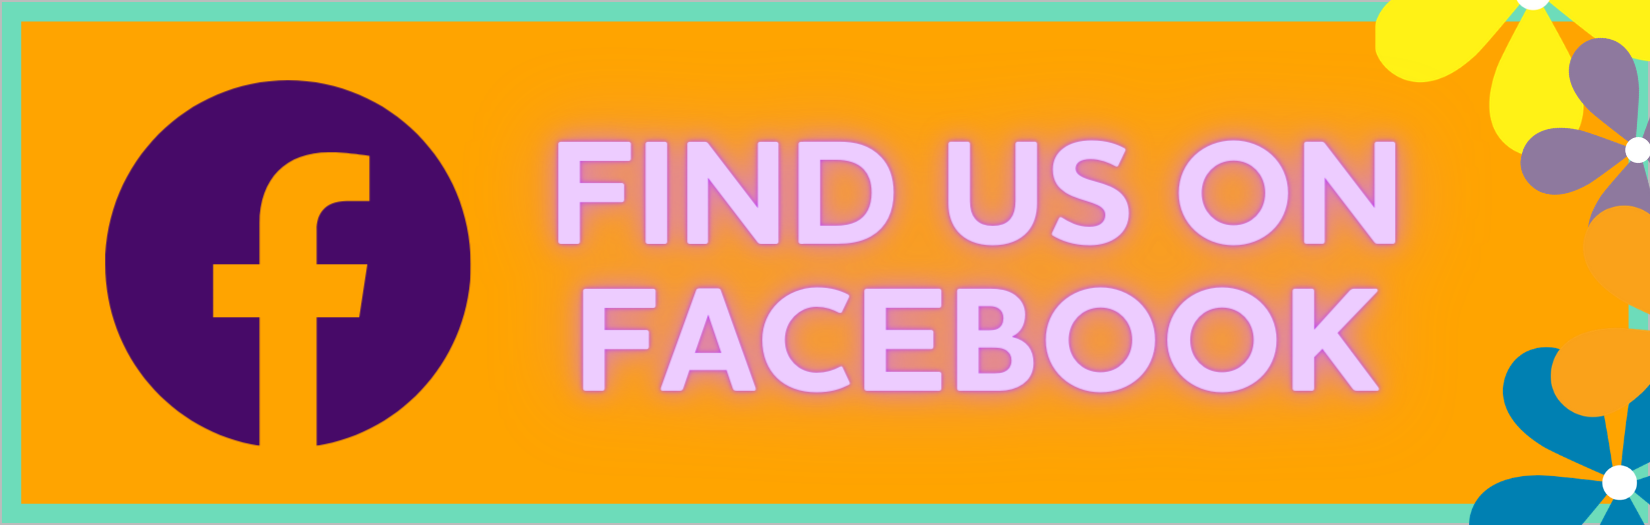 Find Us on Facebook Button